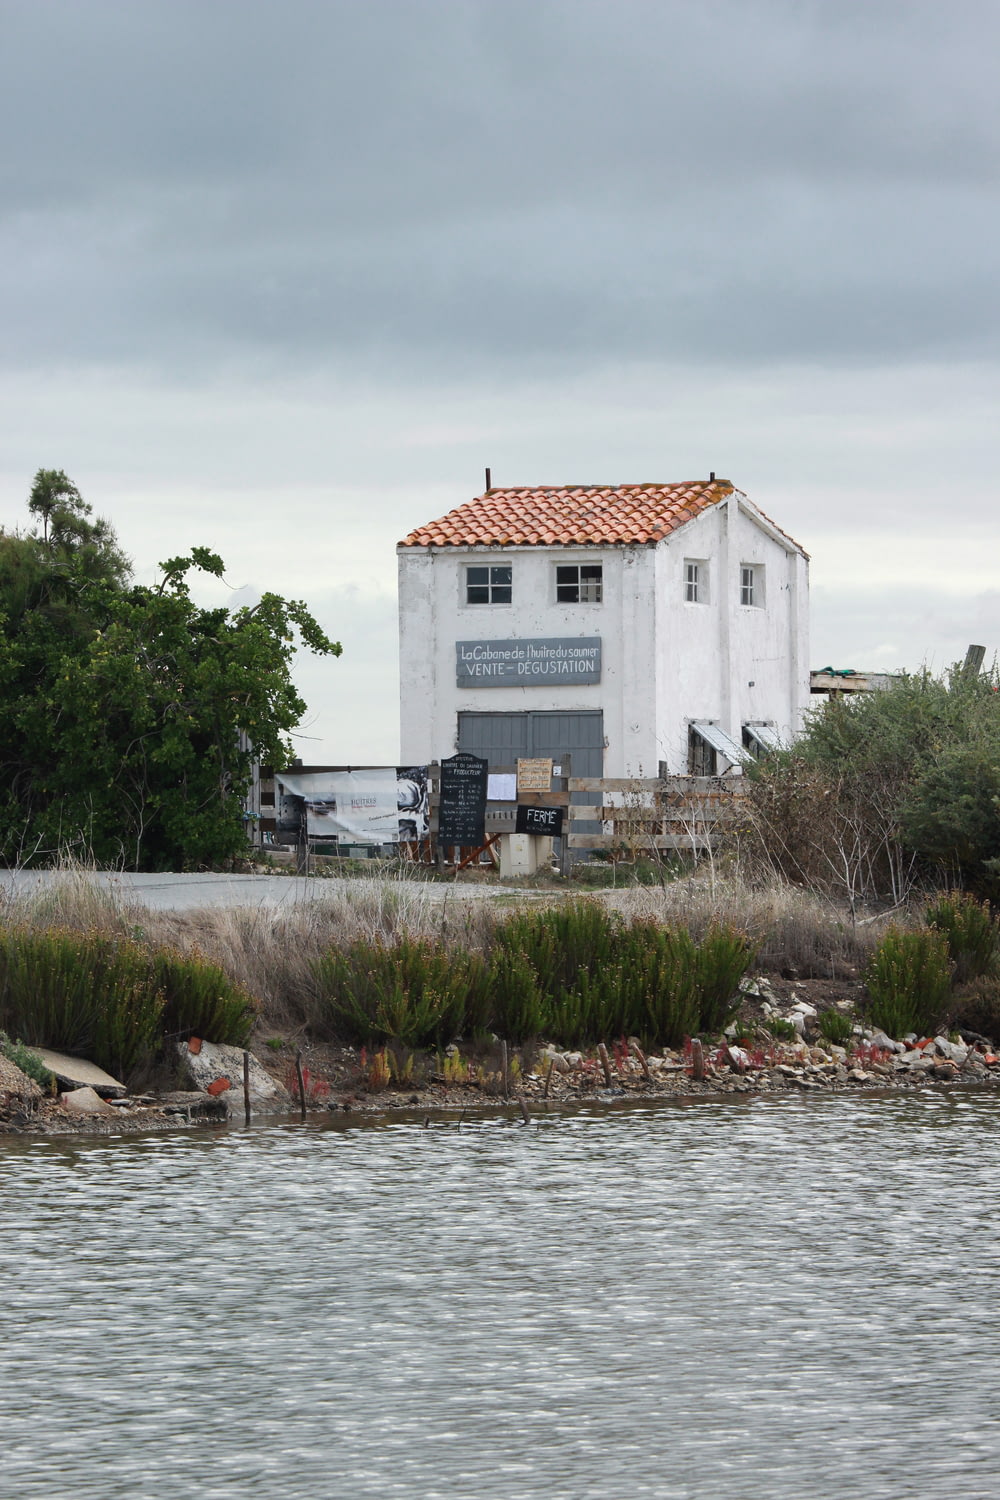 Casa de concreto branco ao lado do corpo de água durante o dia